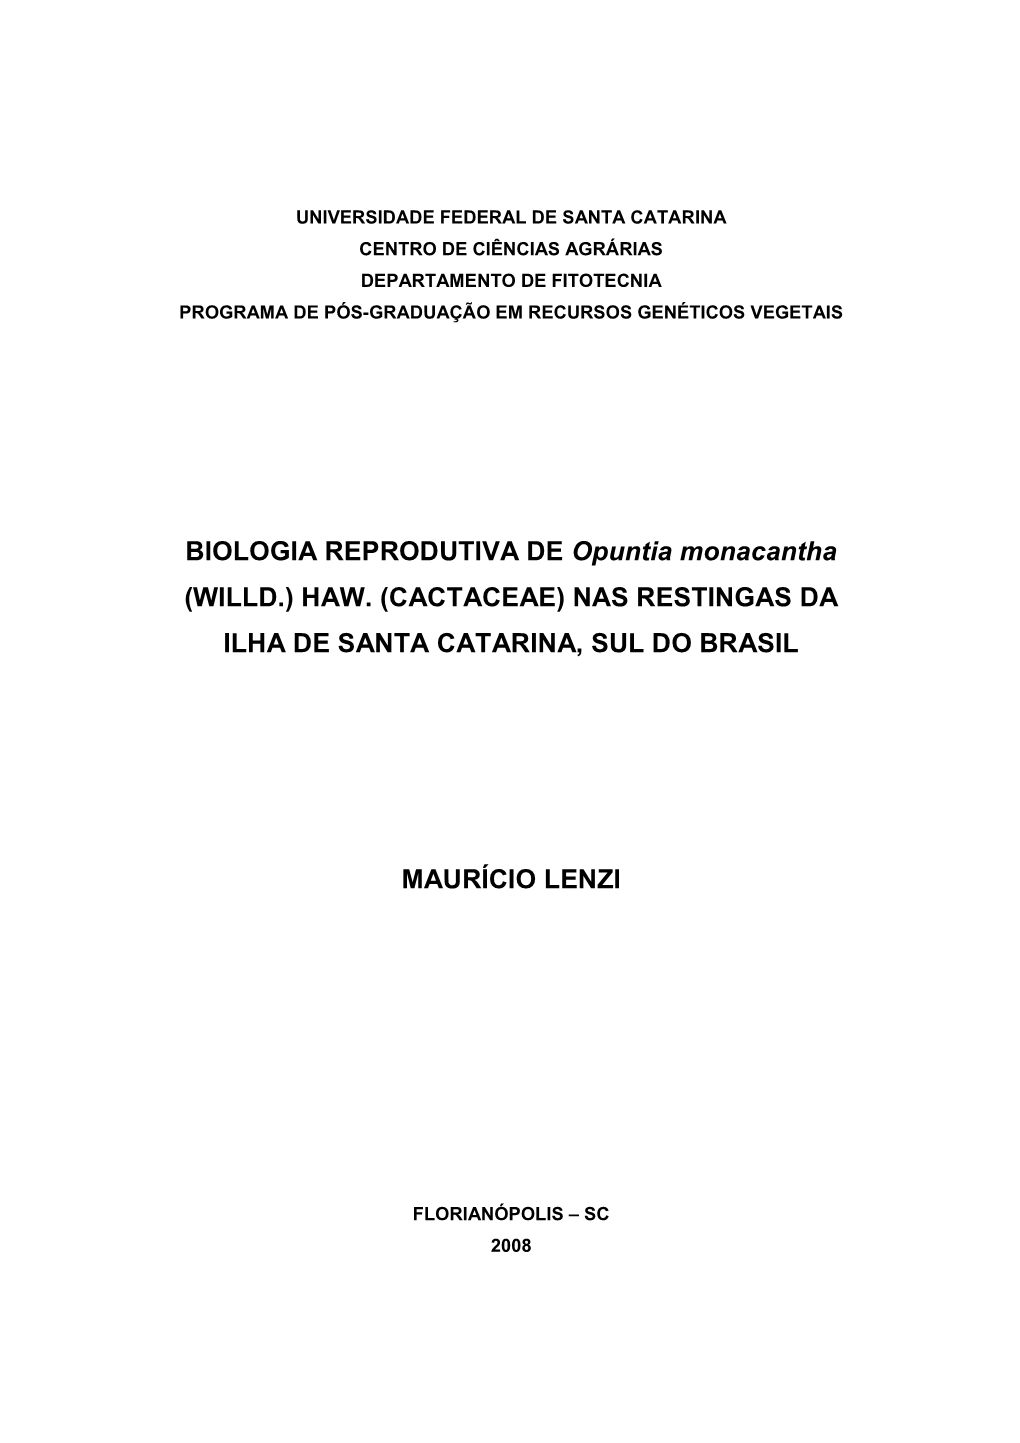 BIOLOGIA REPRODUTIVA DE Opuntia Monacantha (WILLD.) HAW. (CACTACEAE) NAS RESTINGAS DA